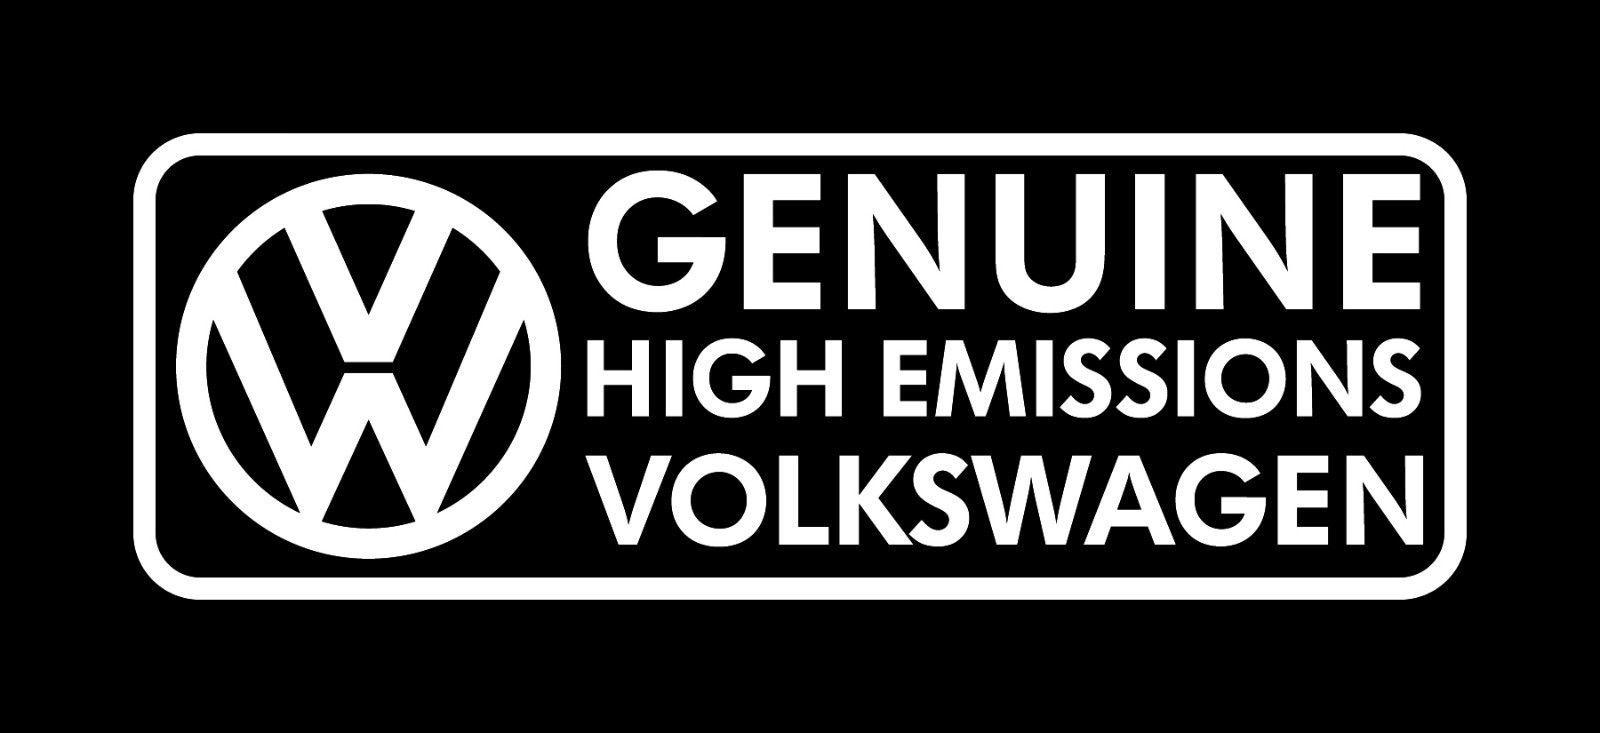 Rustic VW Logo - VW Volkswagen High Emissions Vinyl Sticker Decal Bug Bus Ghia Split ...